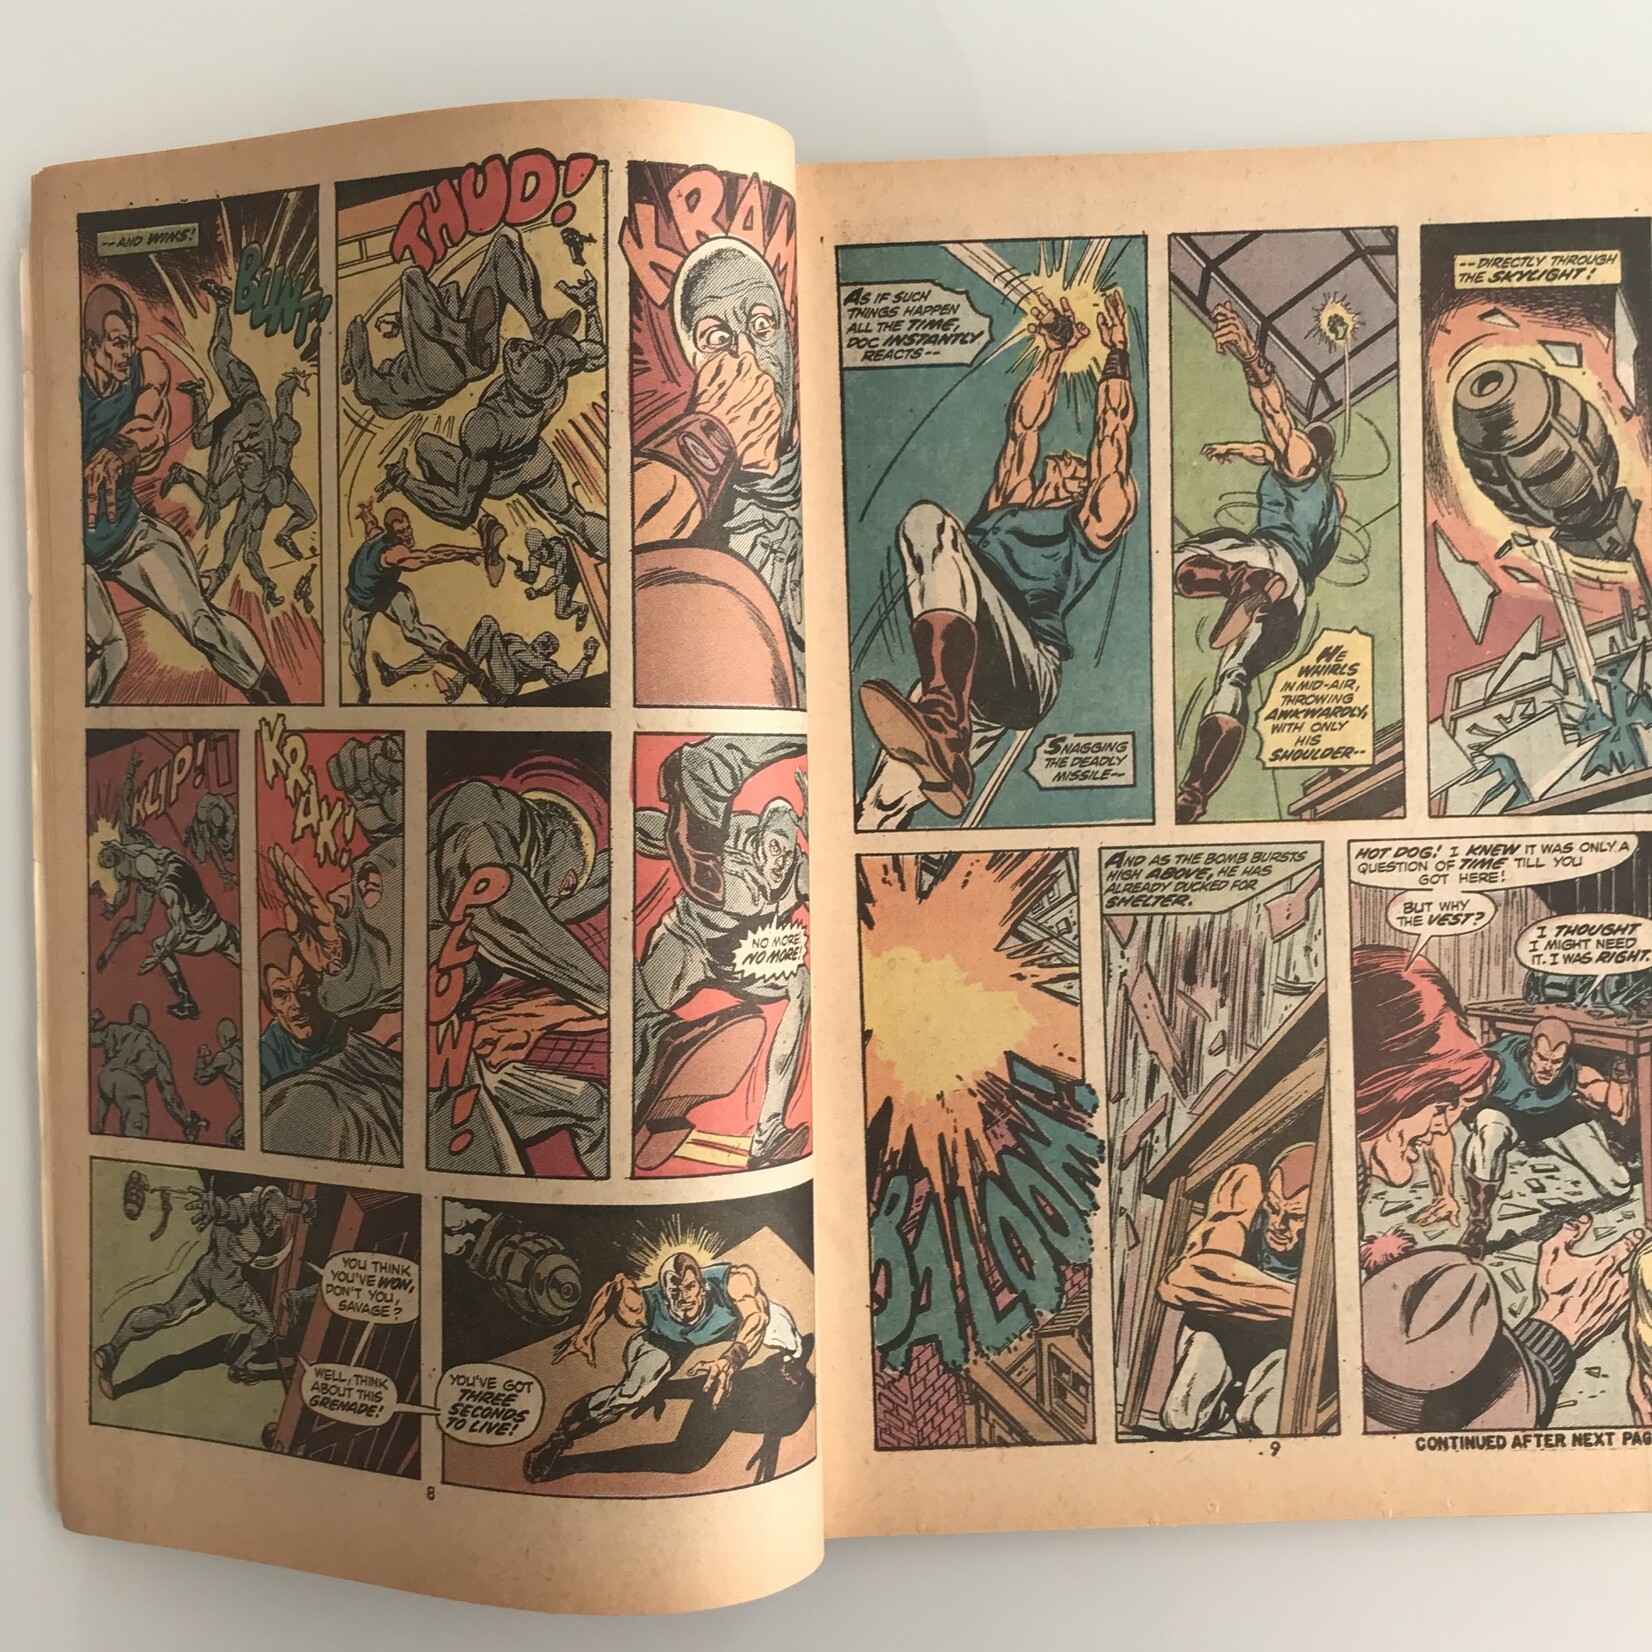 Doc Savage - Vol. 1 #04 May 1973 - Comic Book